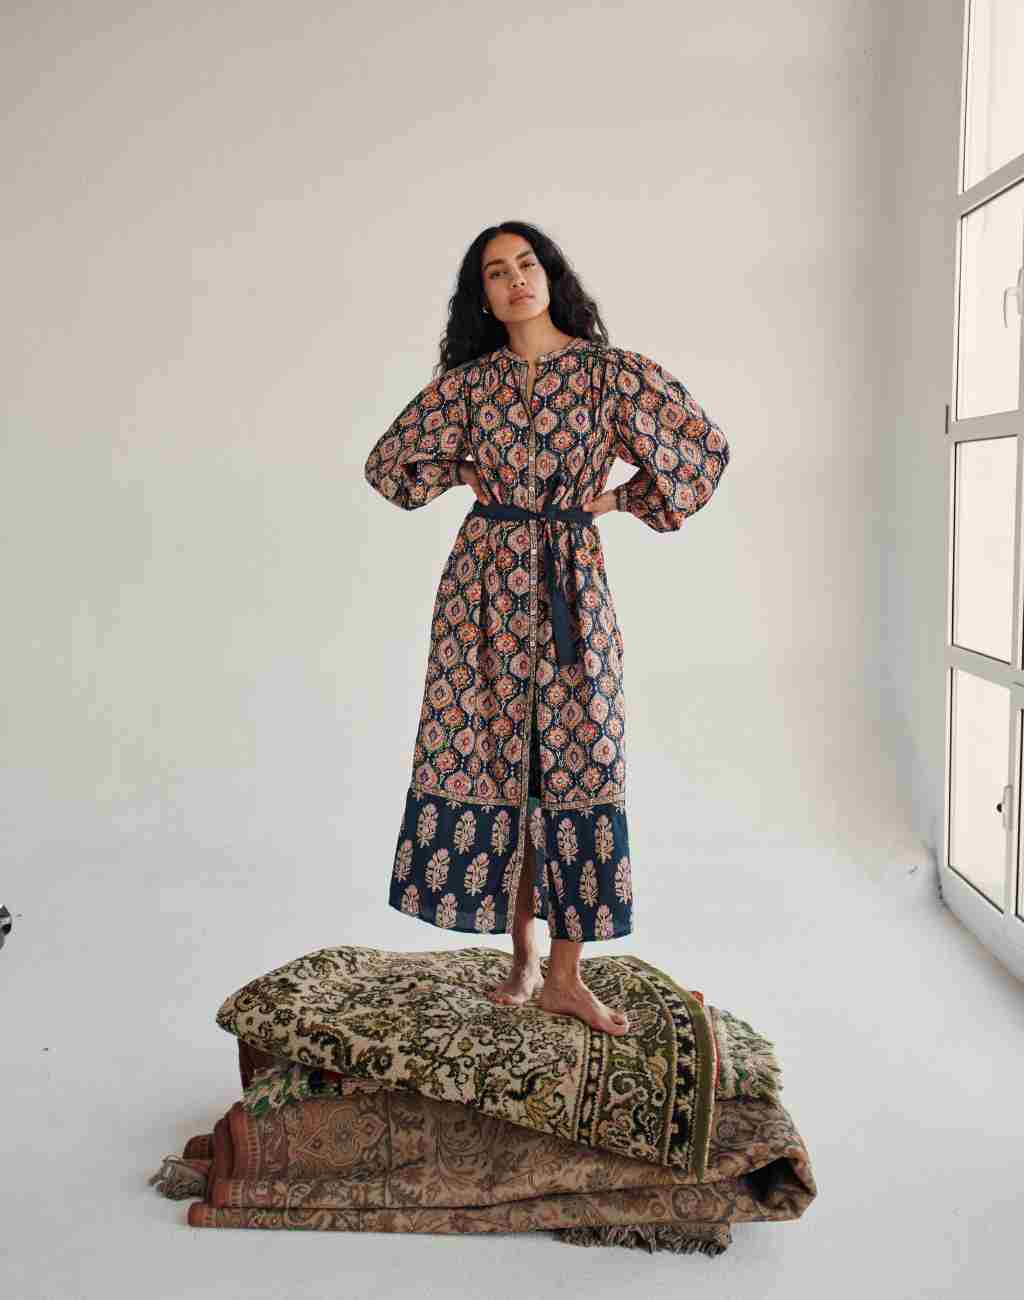 Block Print Shelli Shirtdress with Vibrant Mixed Prints and Padded Patchwork Yoke - Visit Nifty Louise Misha 